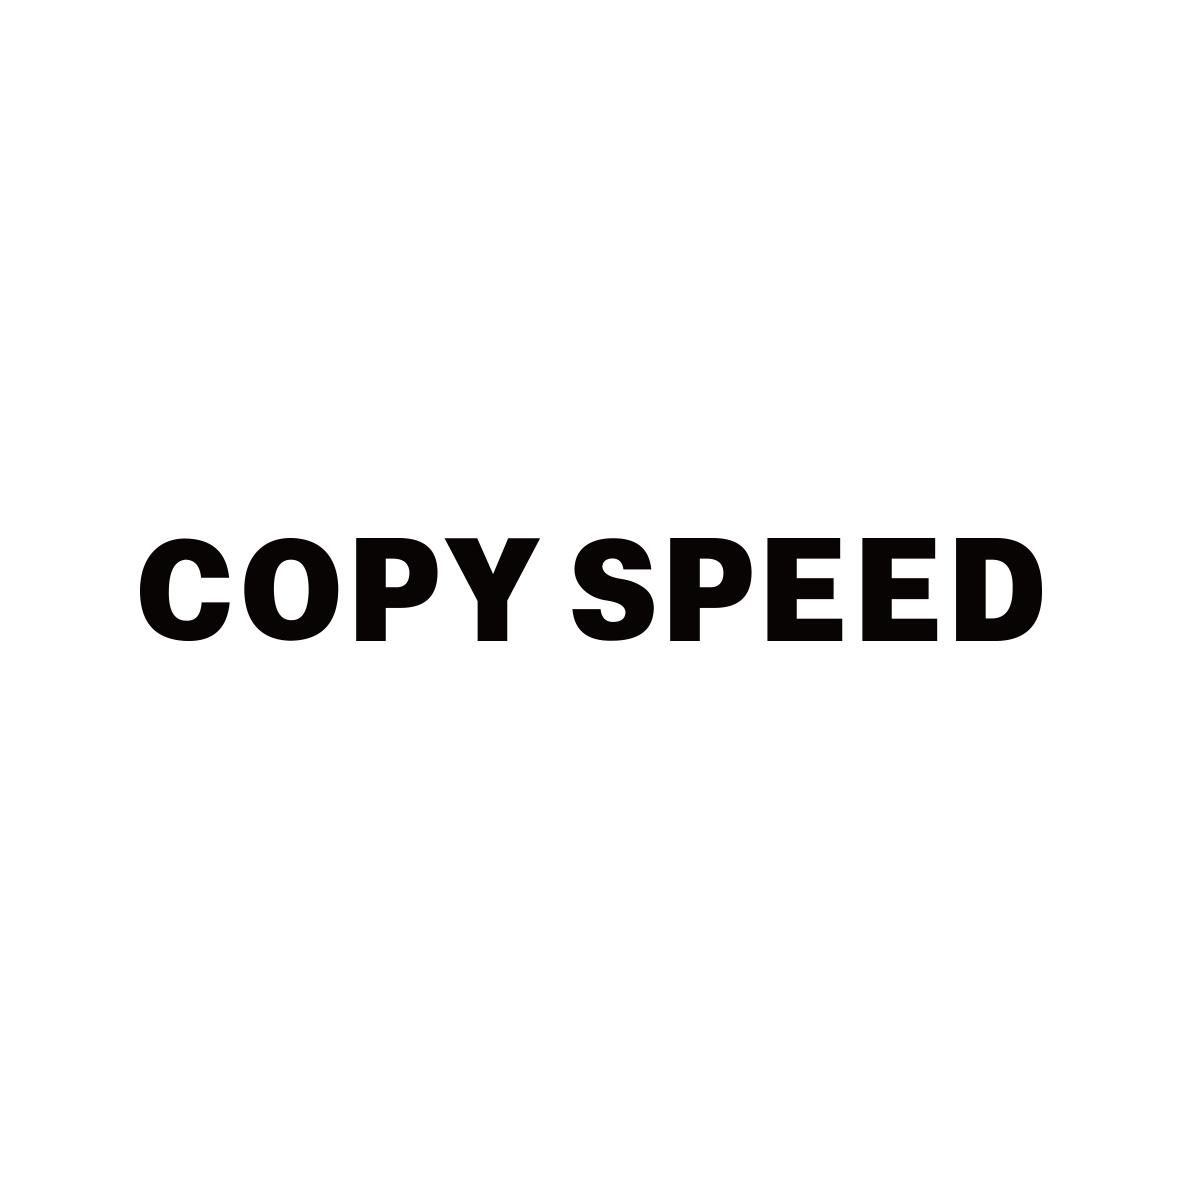 COPY SPEED凹版纸商标转让费用买卖交易流程